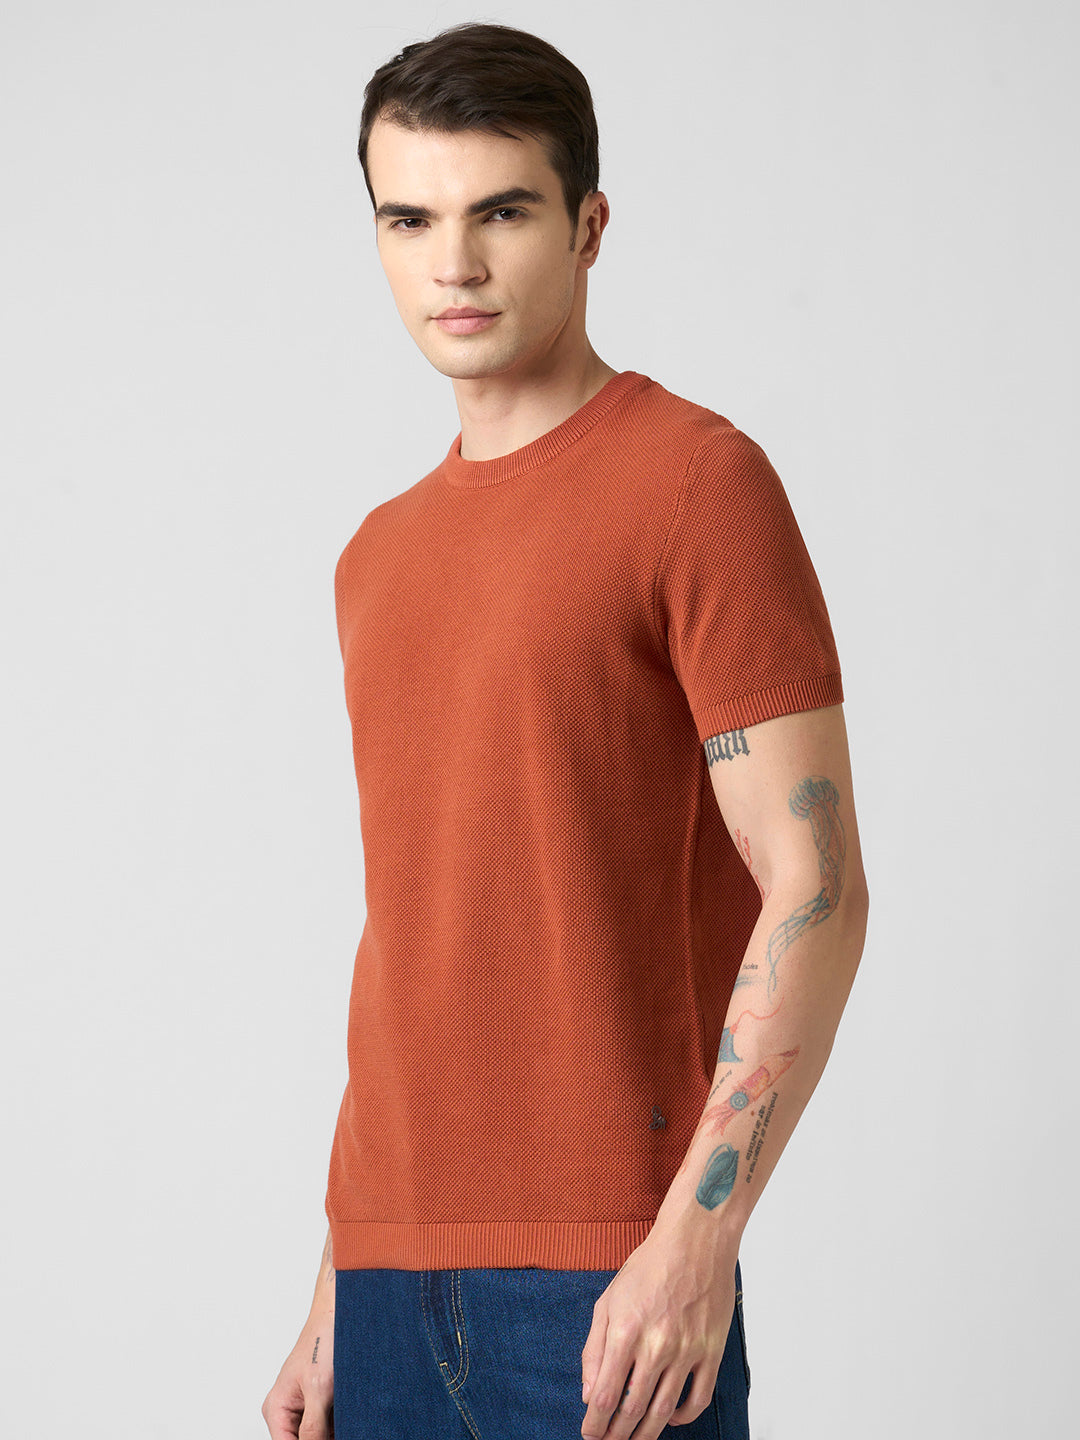 Bombay High Men's Premium Cotton Solid Cinnamon Brown Knit T-Shirt